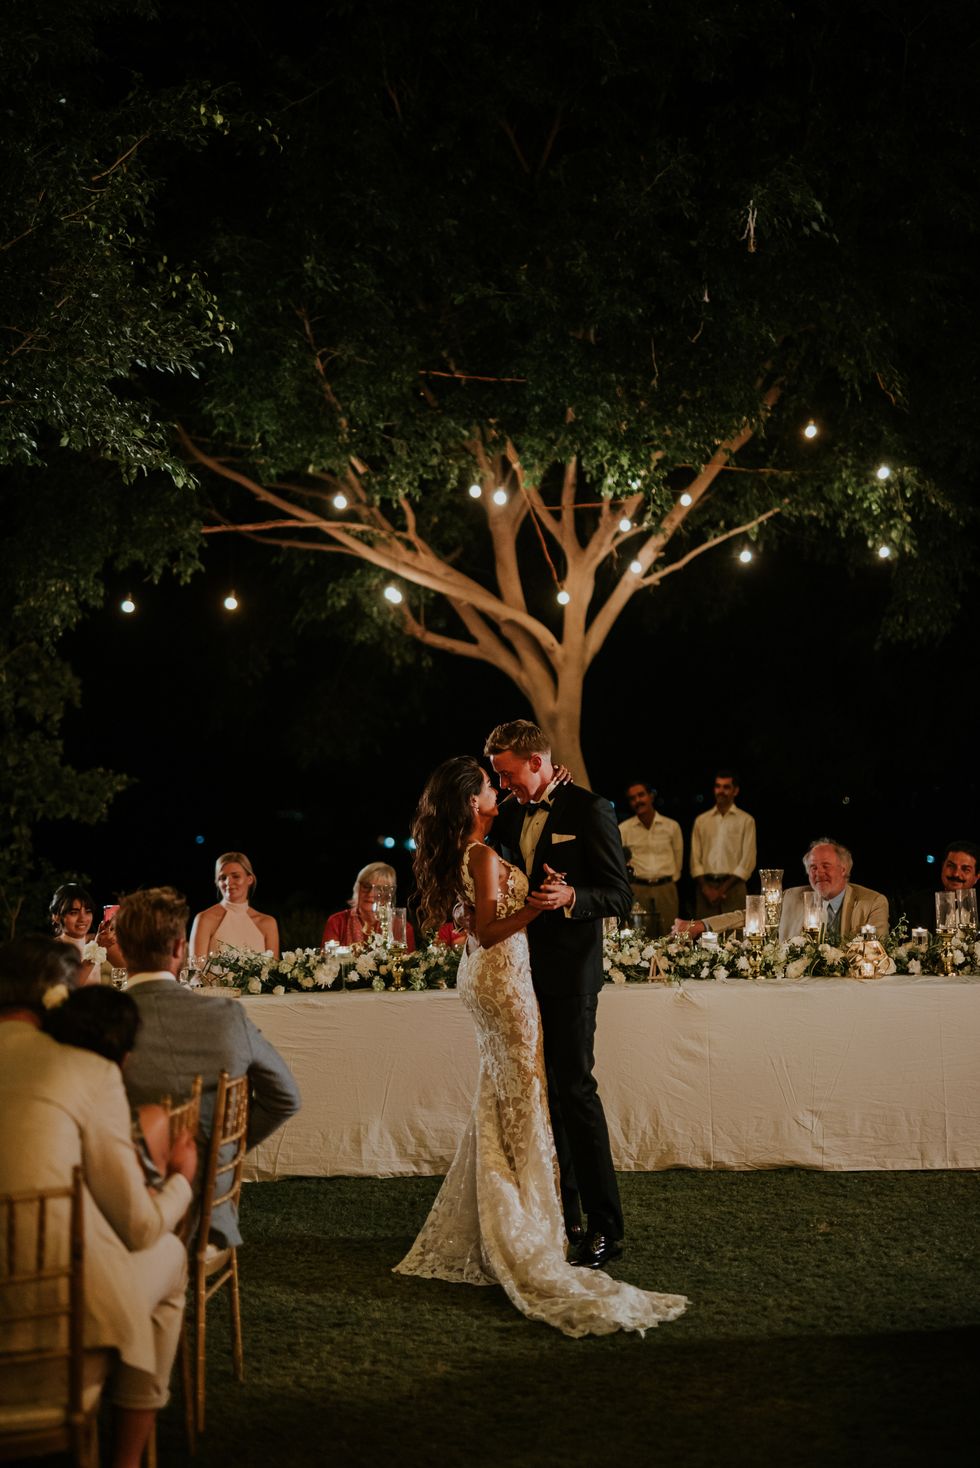 Photograph, Ceremony, Wedding, Bride, Tree, Event, Lighting, Dress, Wedding reception, Marriage, 